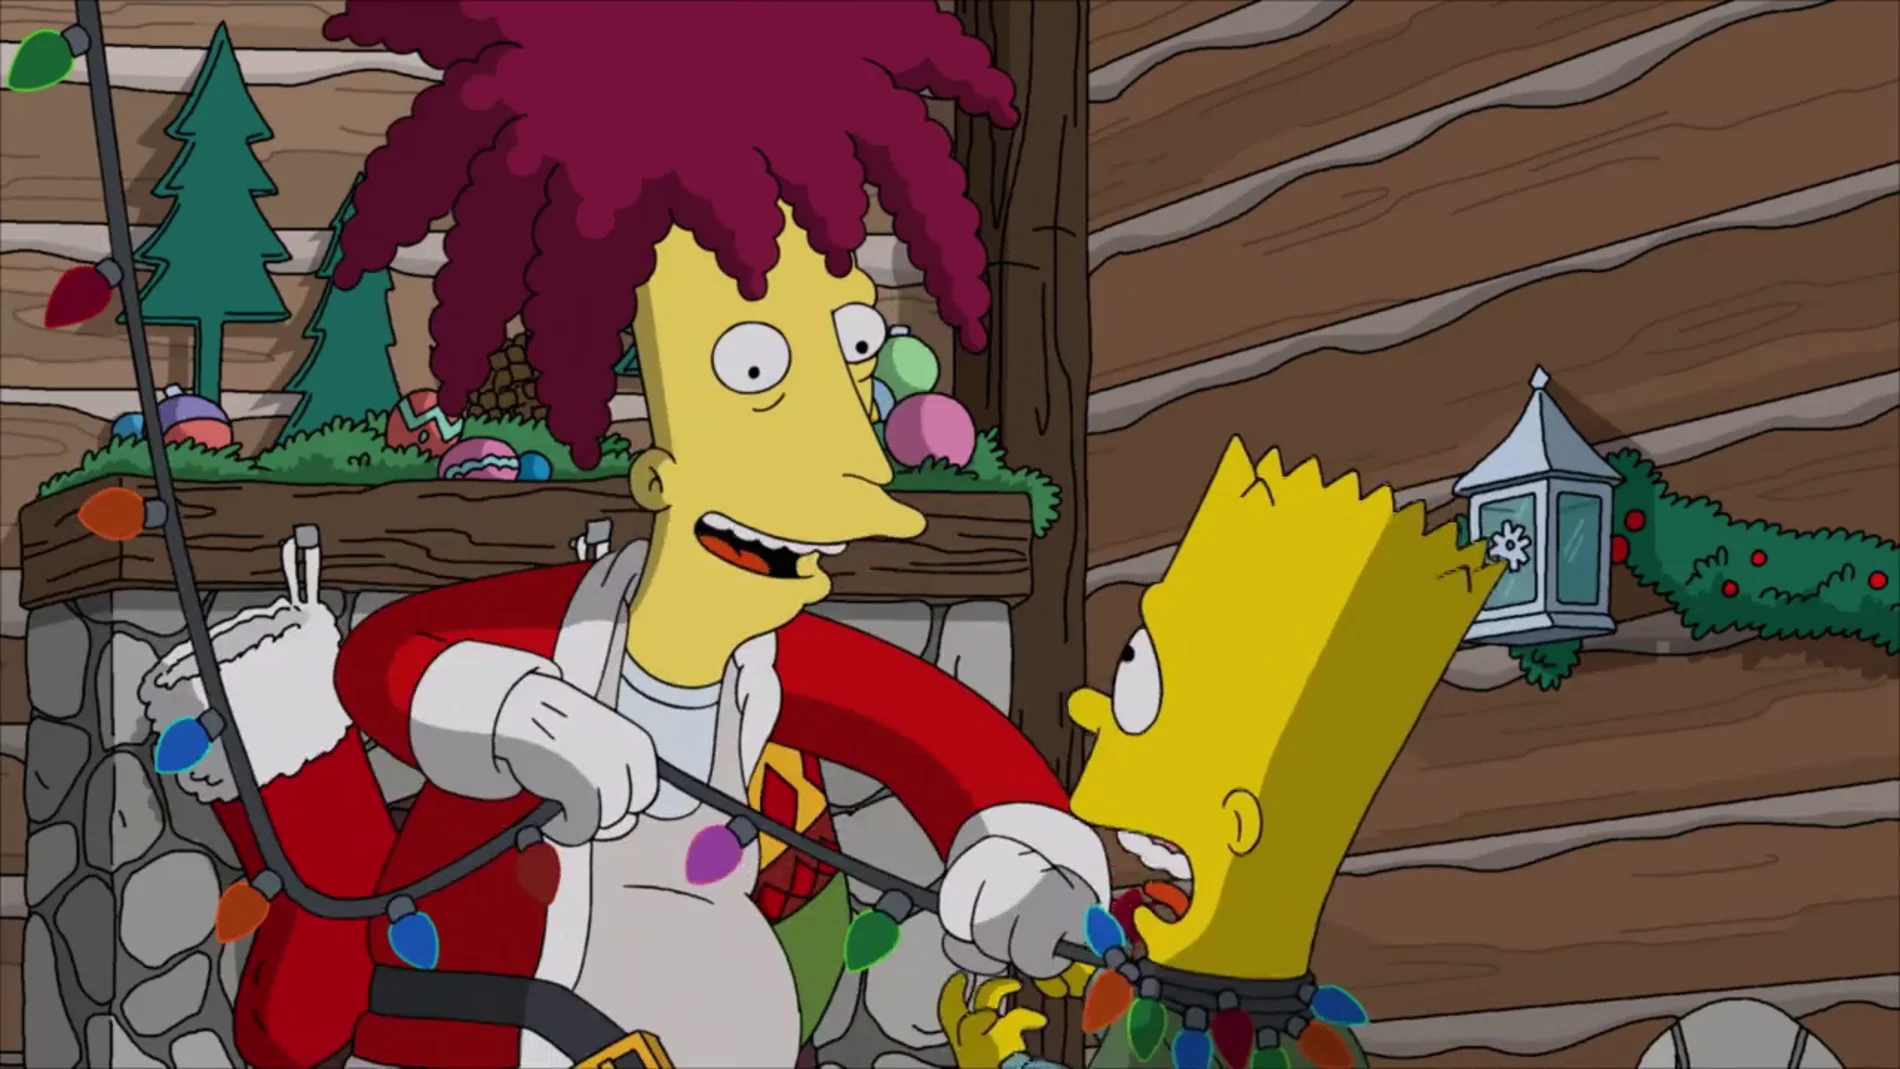 El actor secundario Bob vuelve a intentar matar a Bart